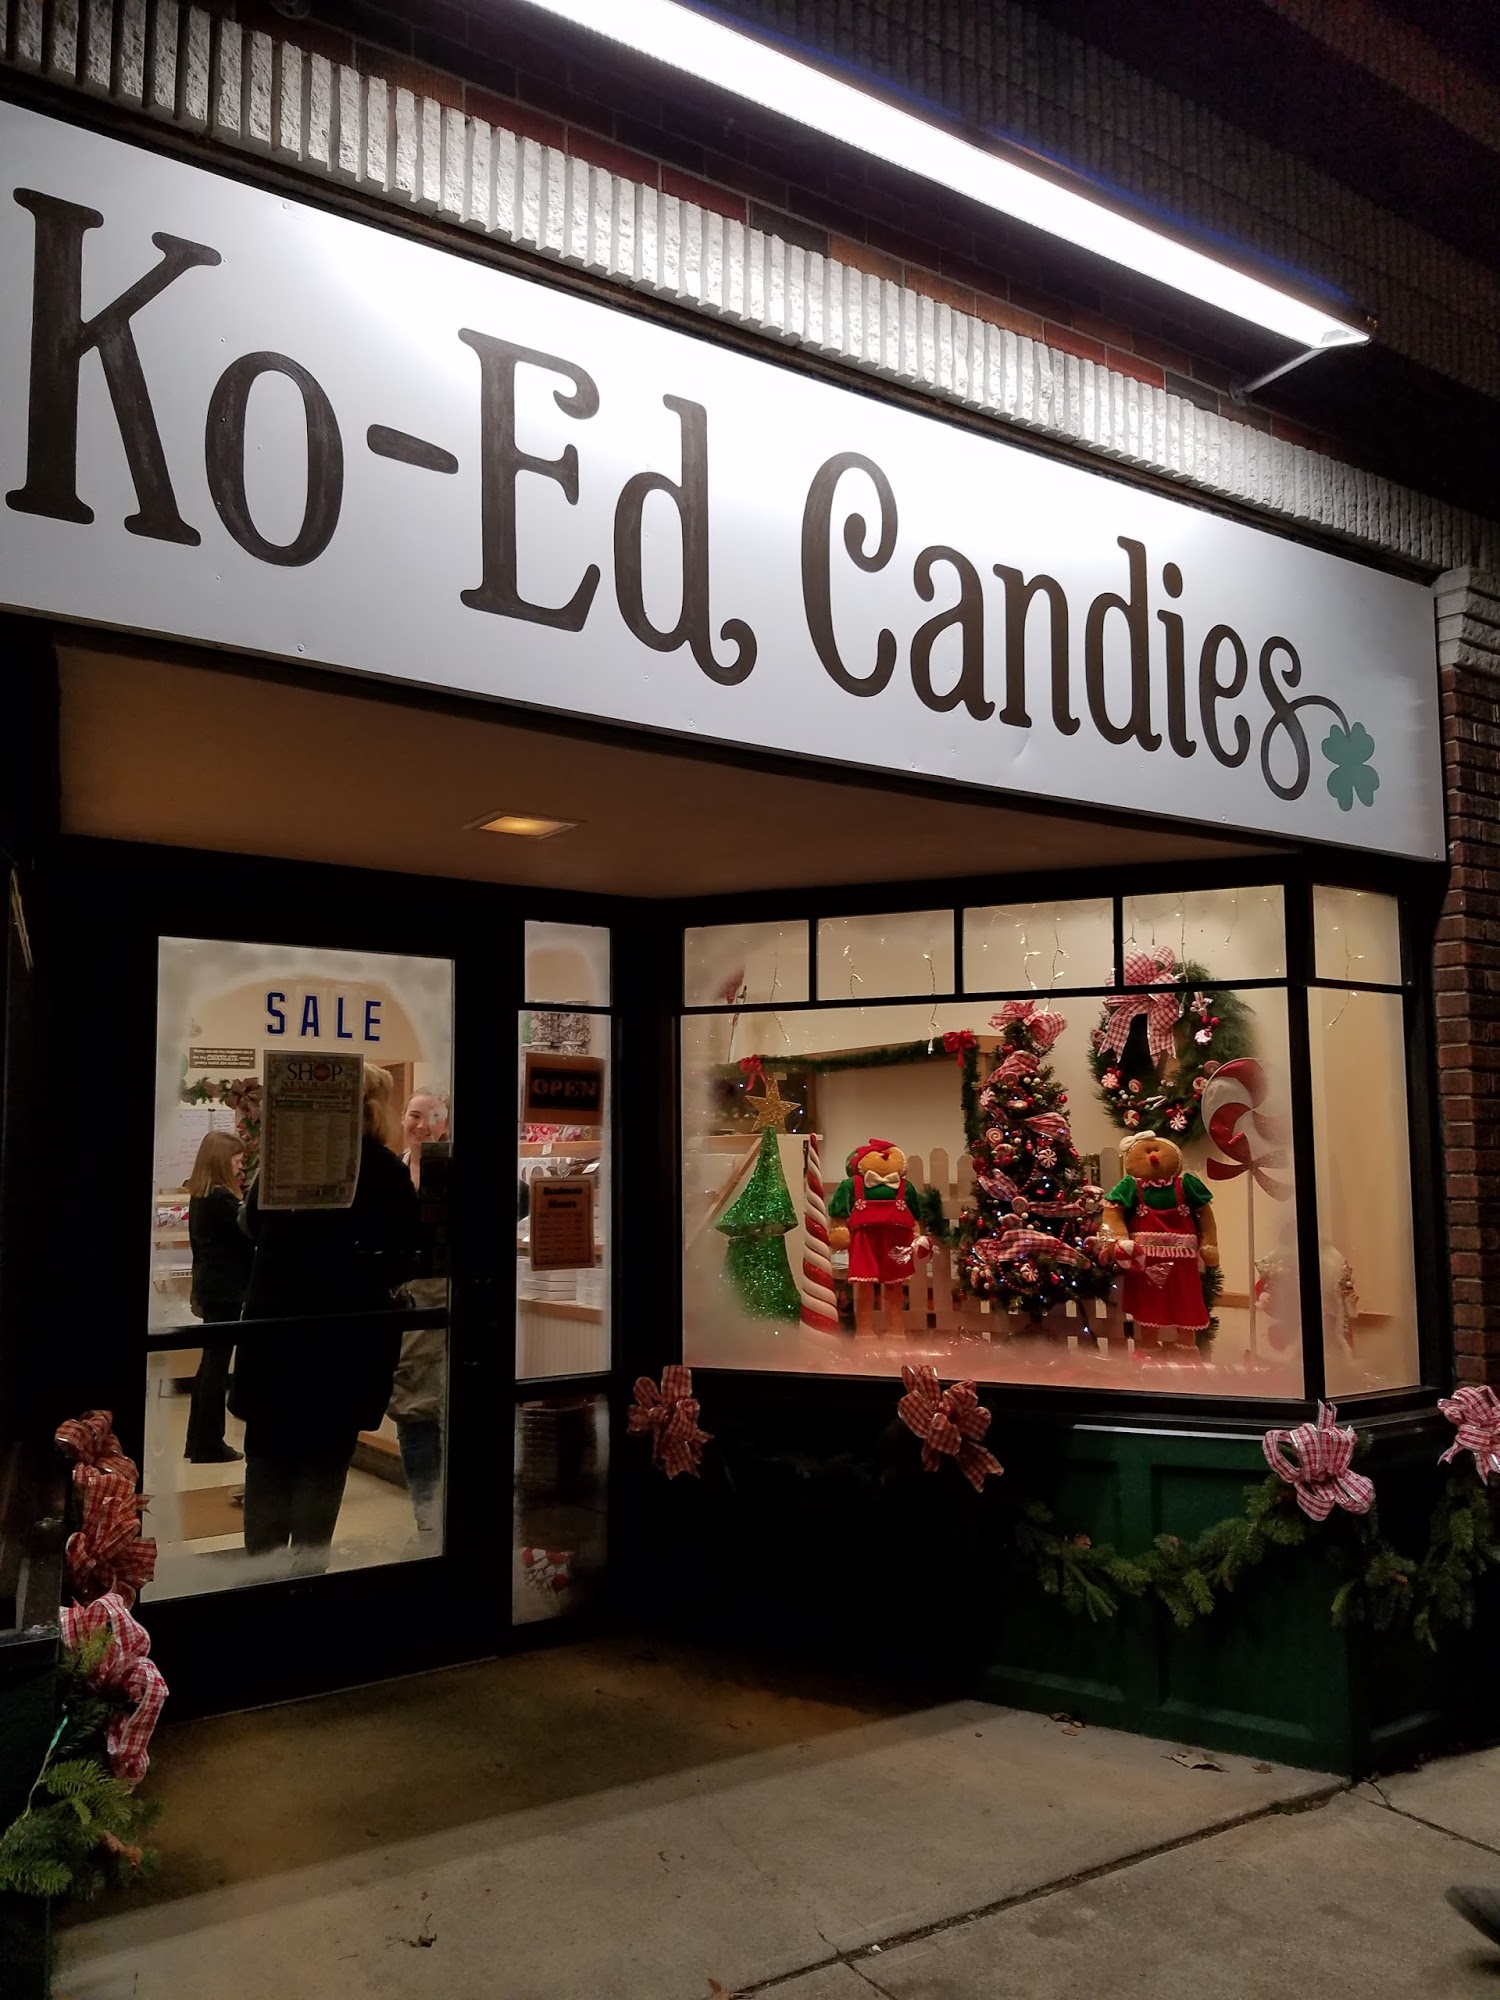 Ko-Ed Candies